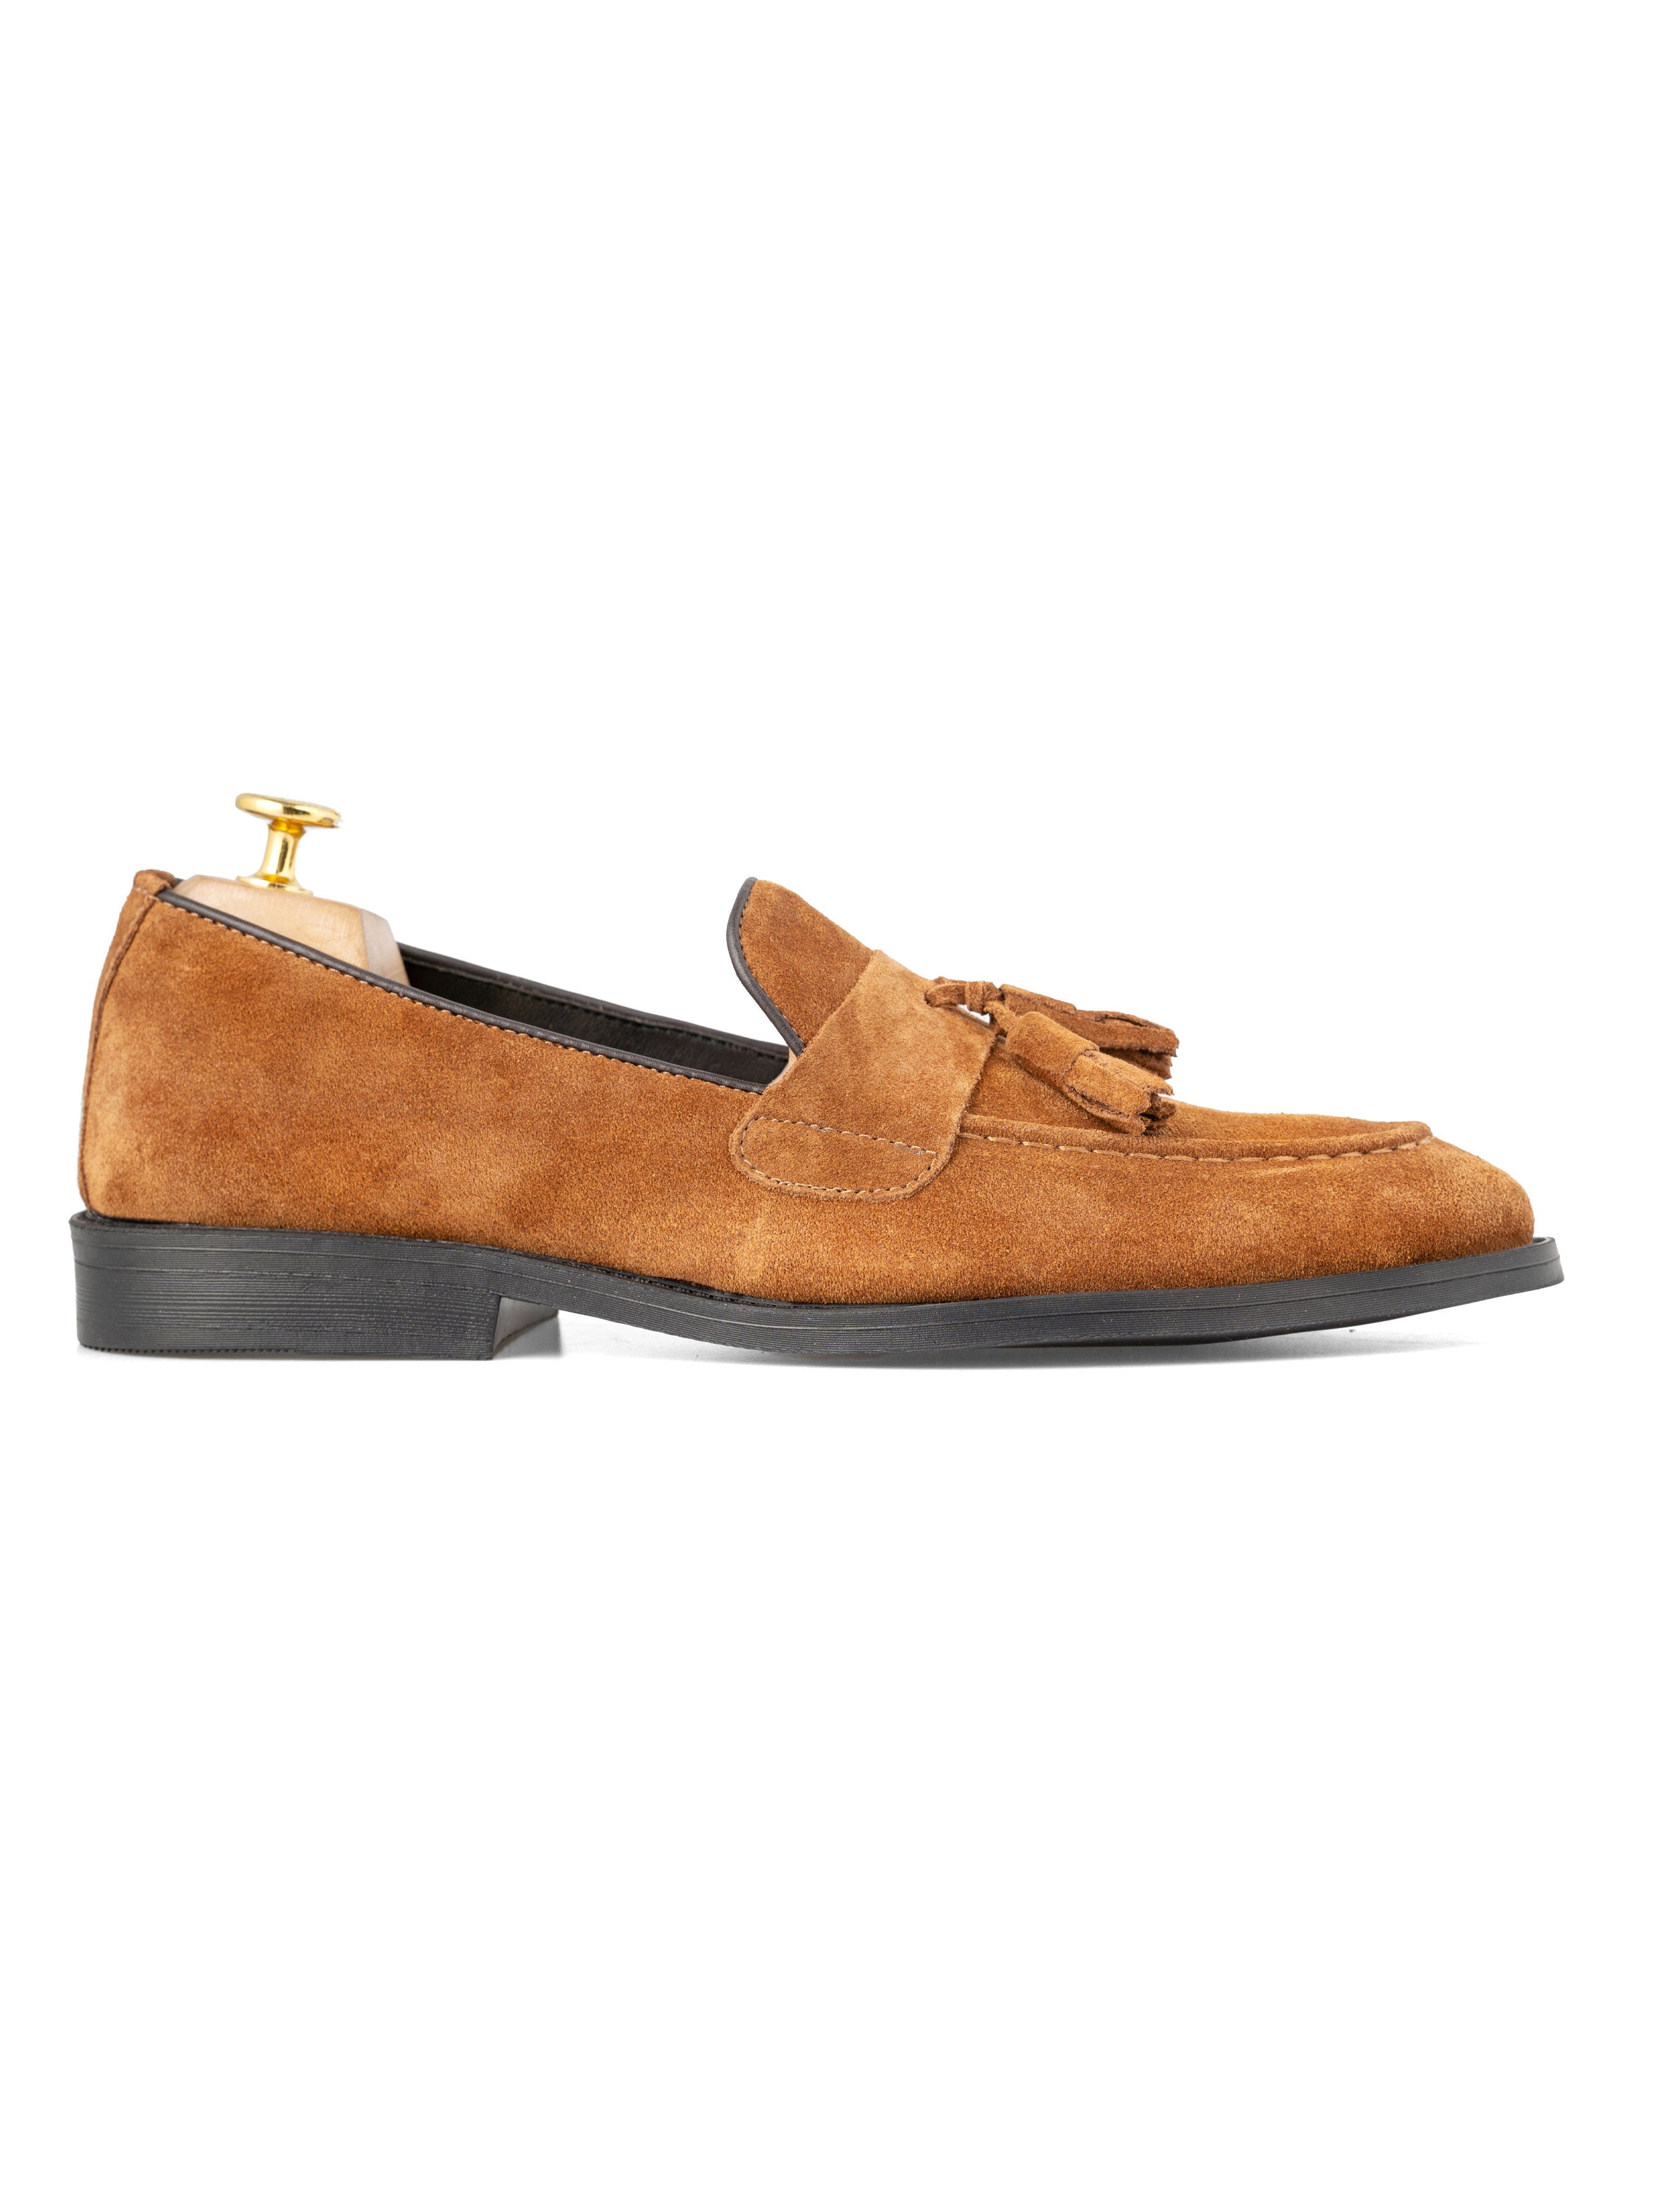 Rocky Tassel Loafer - Camel Suede Leather (Flexi-Sole) - Zeve Shoes